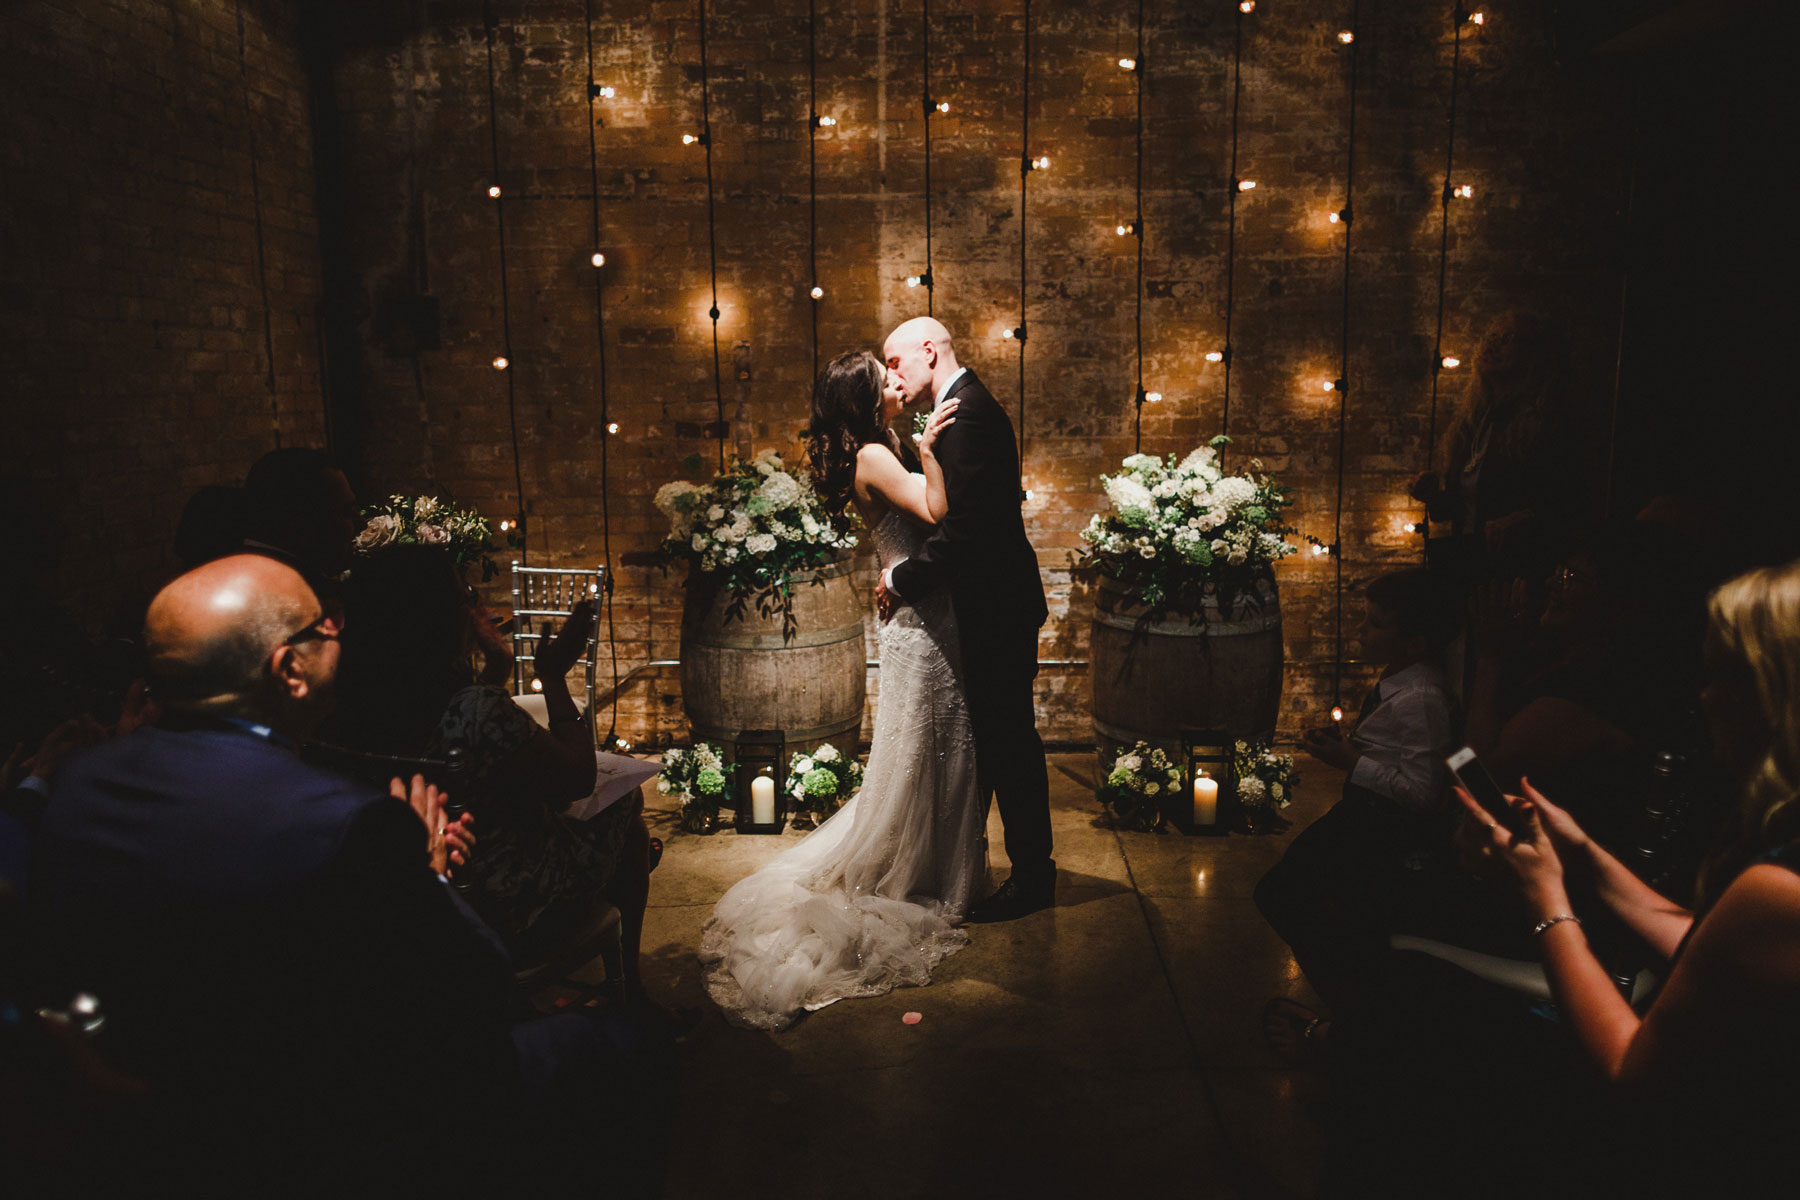 Expert Lighting Tips for Wedding Reception by Toronto Top 10 Wedding Photographer